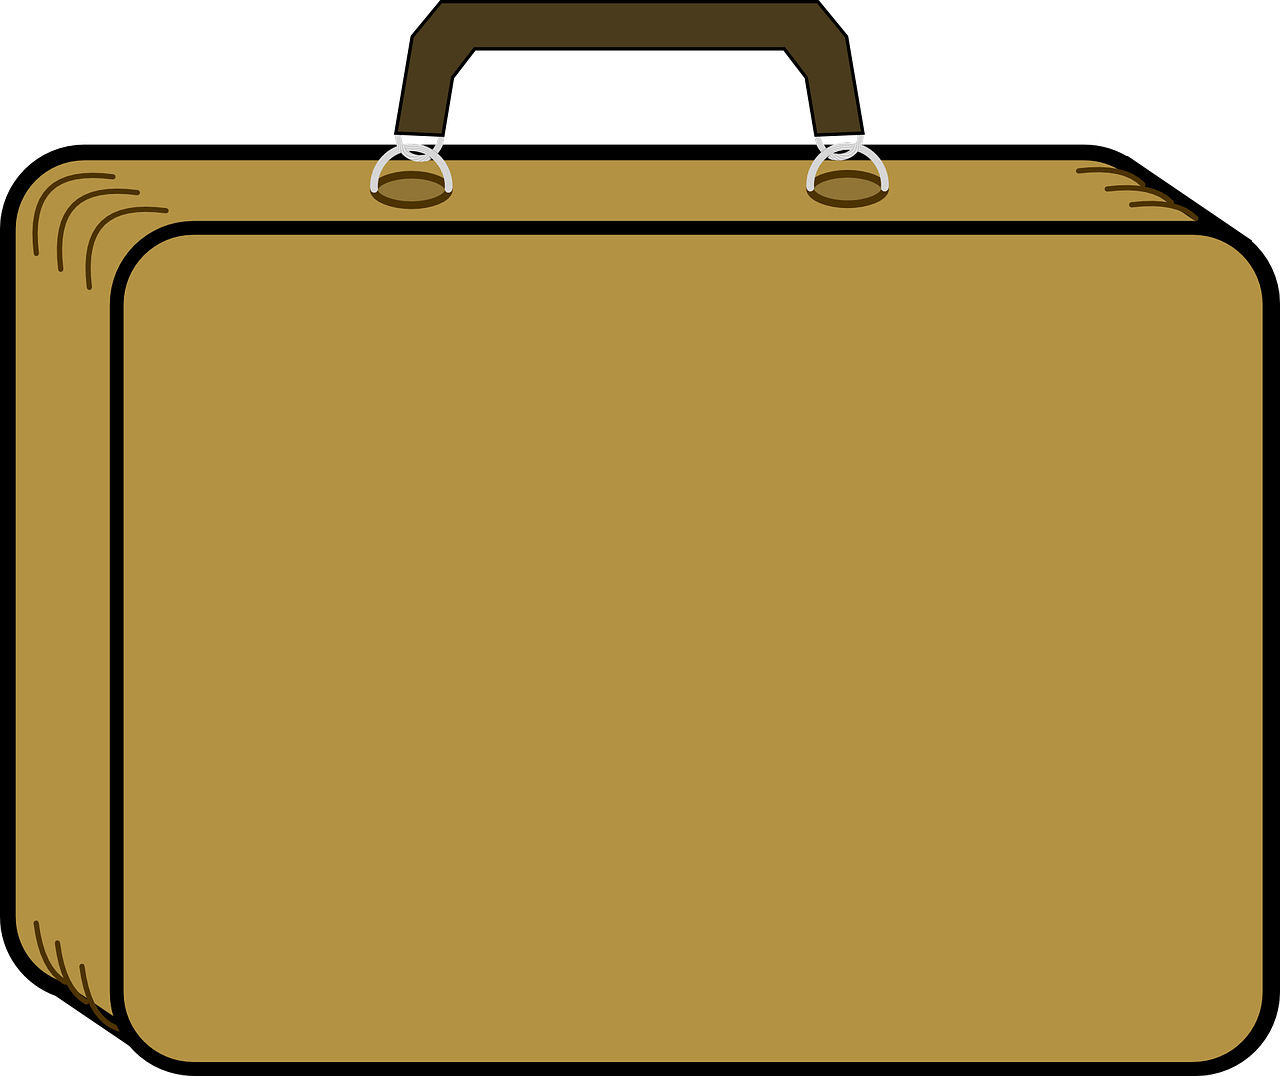 suitcase brown tan free photo